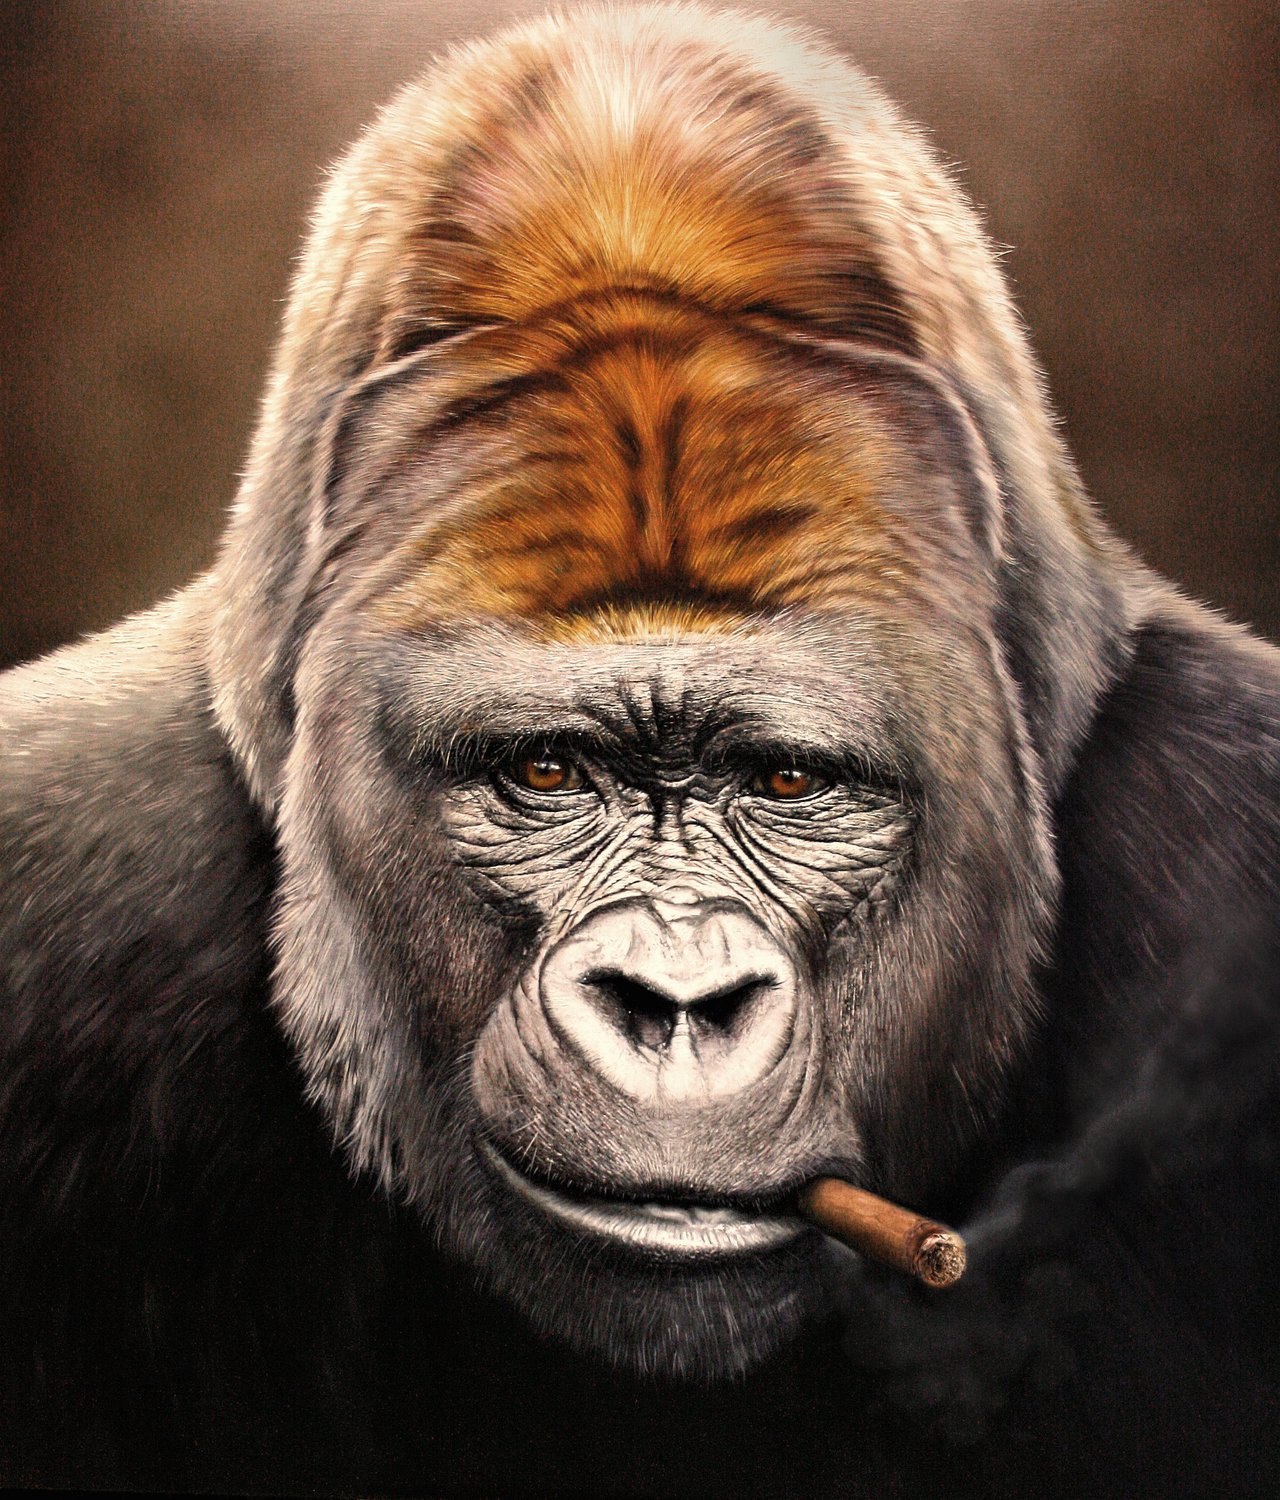 Wallpapers gorilla animals portrait on the desktop